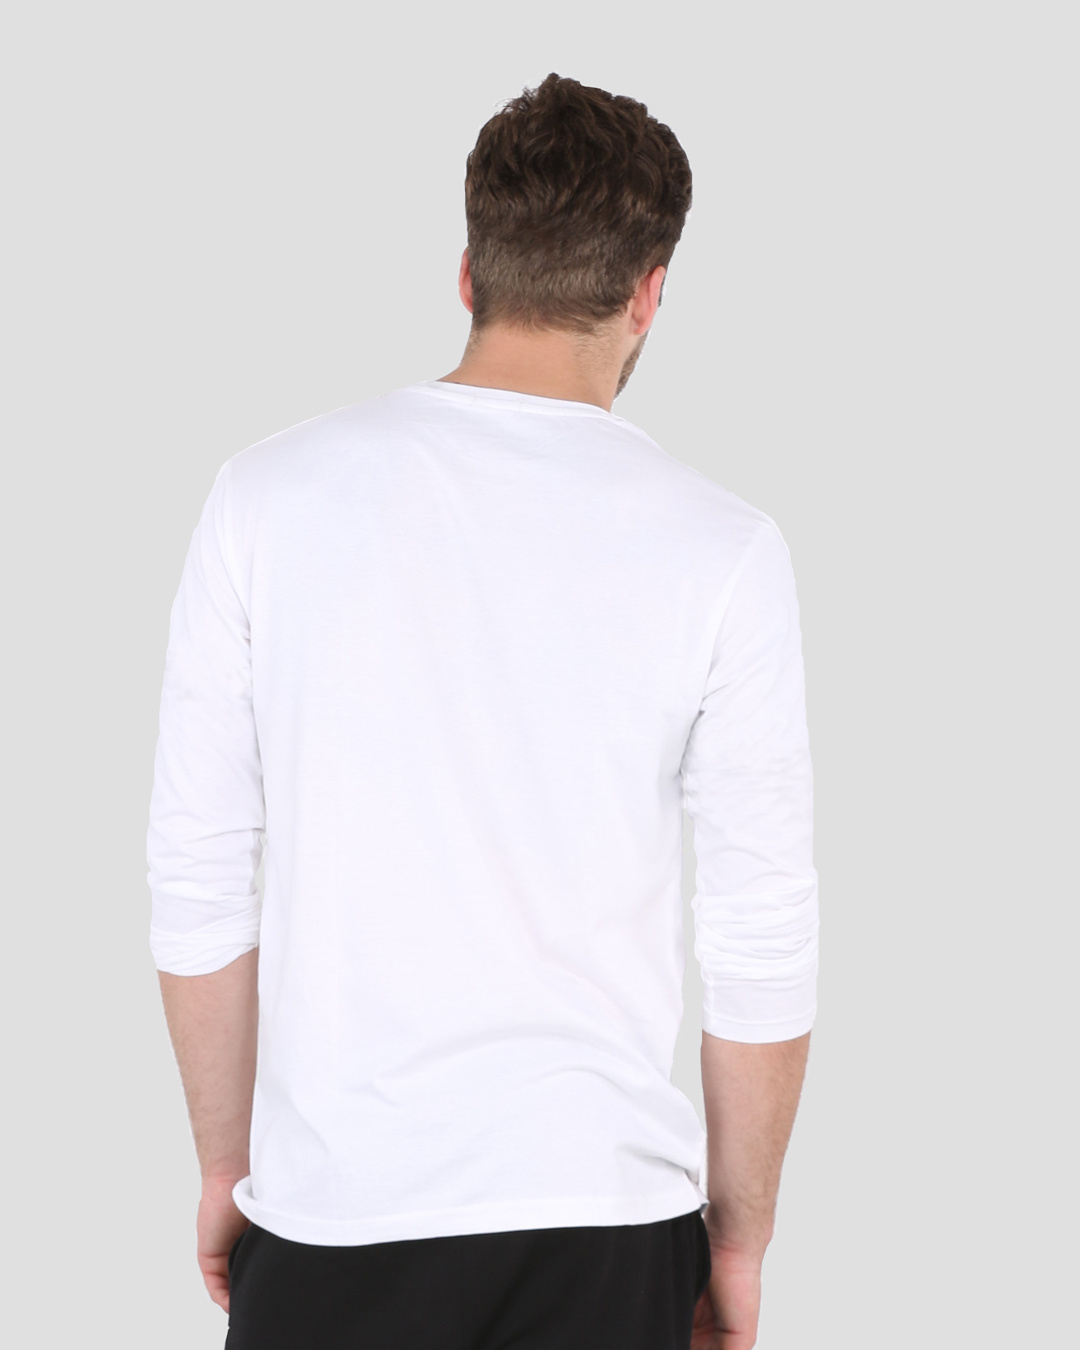 Shop Pocket Jerry (TJL) Men's Full Sleeve T-shirt-Back